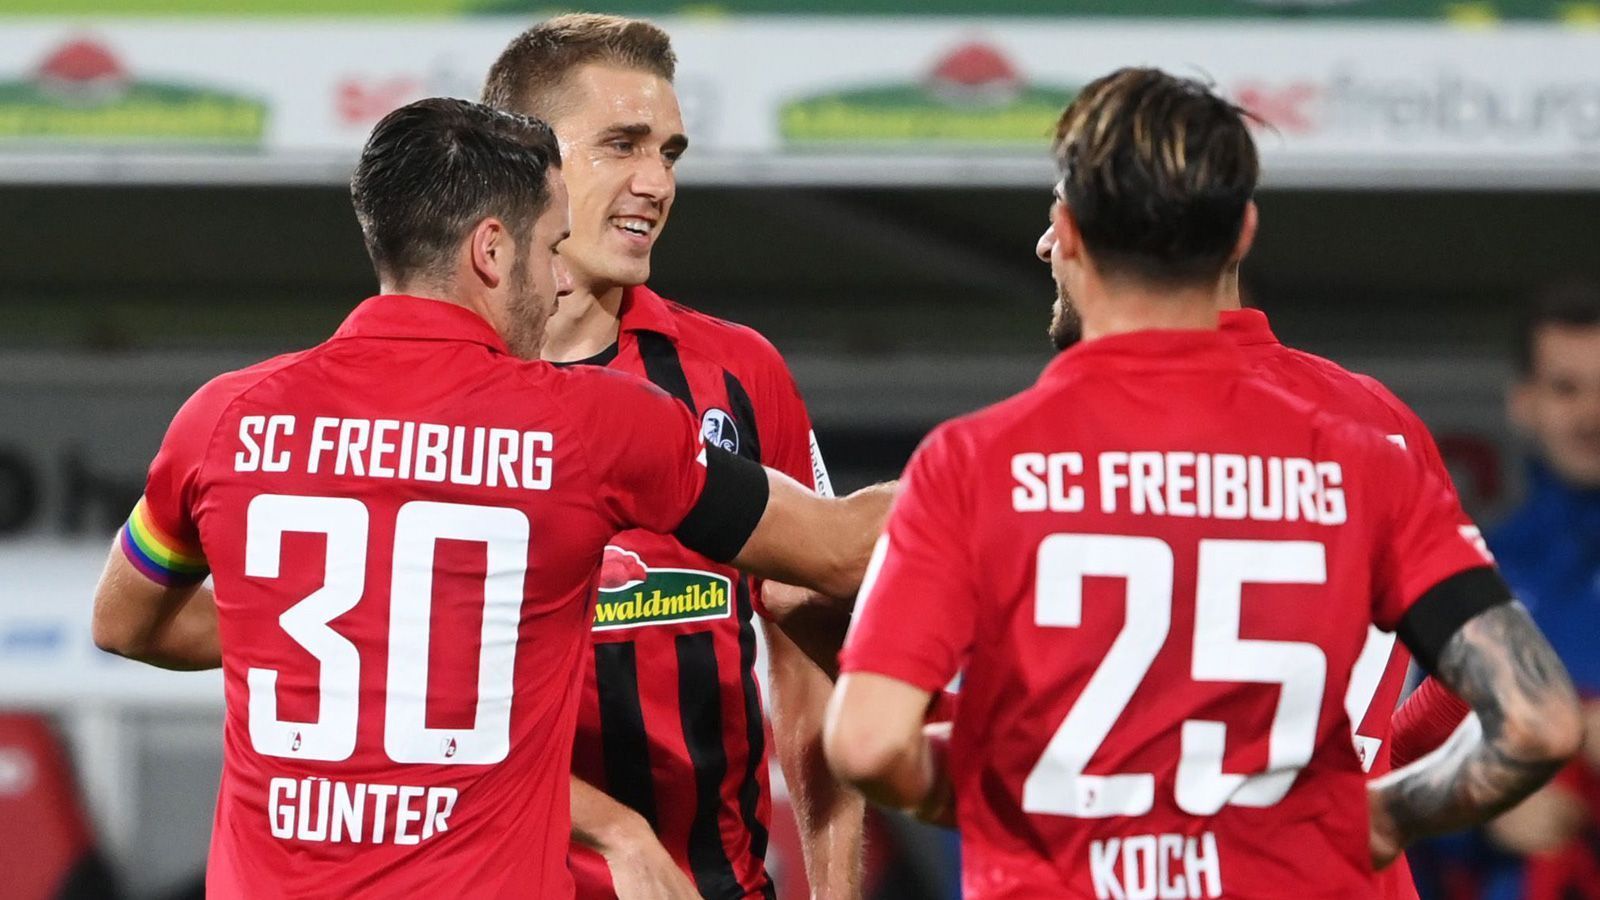 
                <strong>SC Freiburg (Saison 2018/19)</strong><br>
                Ausgaben für Berater: 7.191.000 EuroPersonalaufwand: 45.176.000 Euro
              